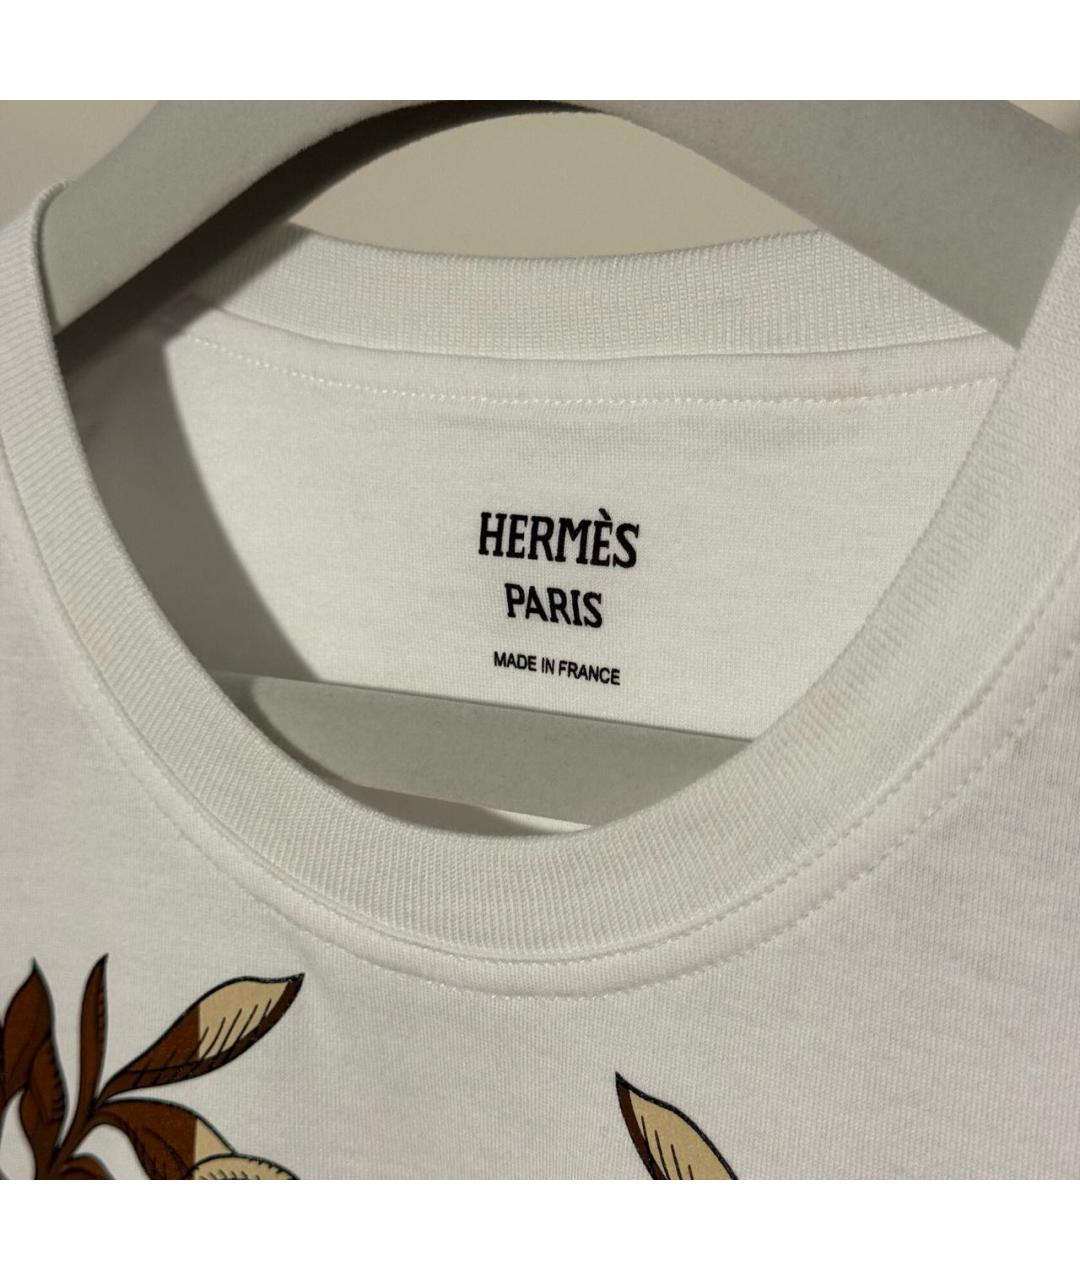 HERMES PRE-OWNED Хлопковая футболка, фото 3